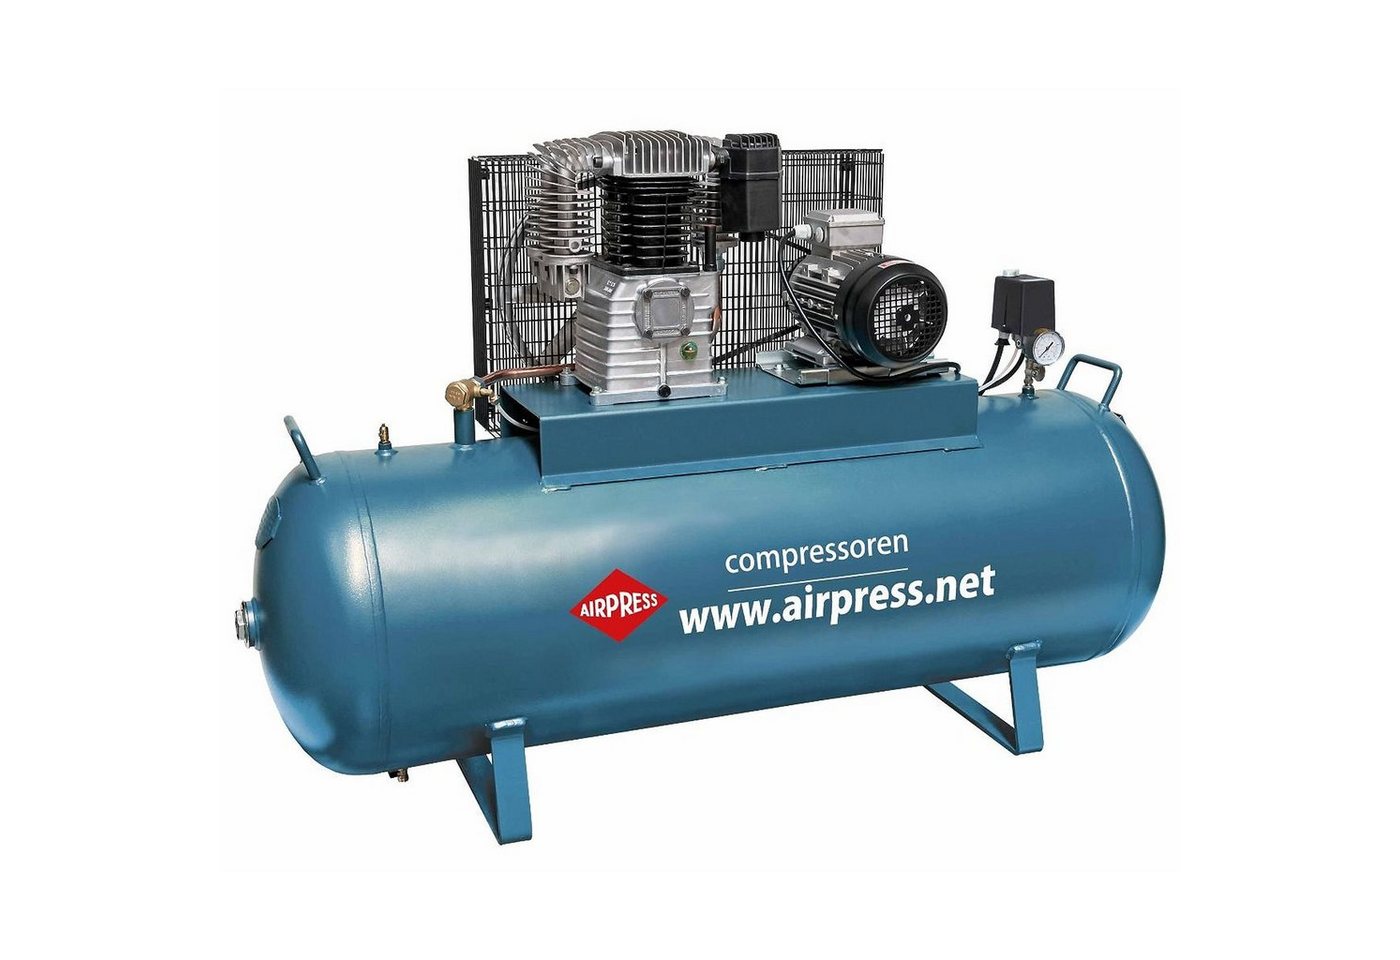 Airpress Kompressor Kompressor 4 PS 300 Liter 15 bar Typ K300-600 36524-N, max. 15 bar, 300 l von Airpress